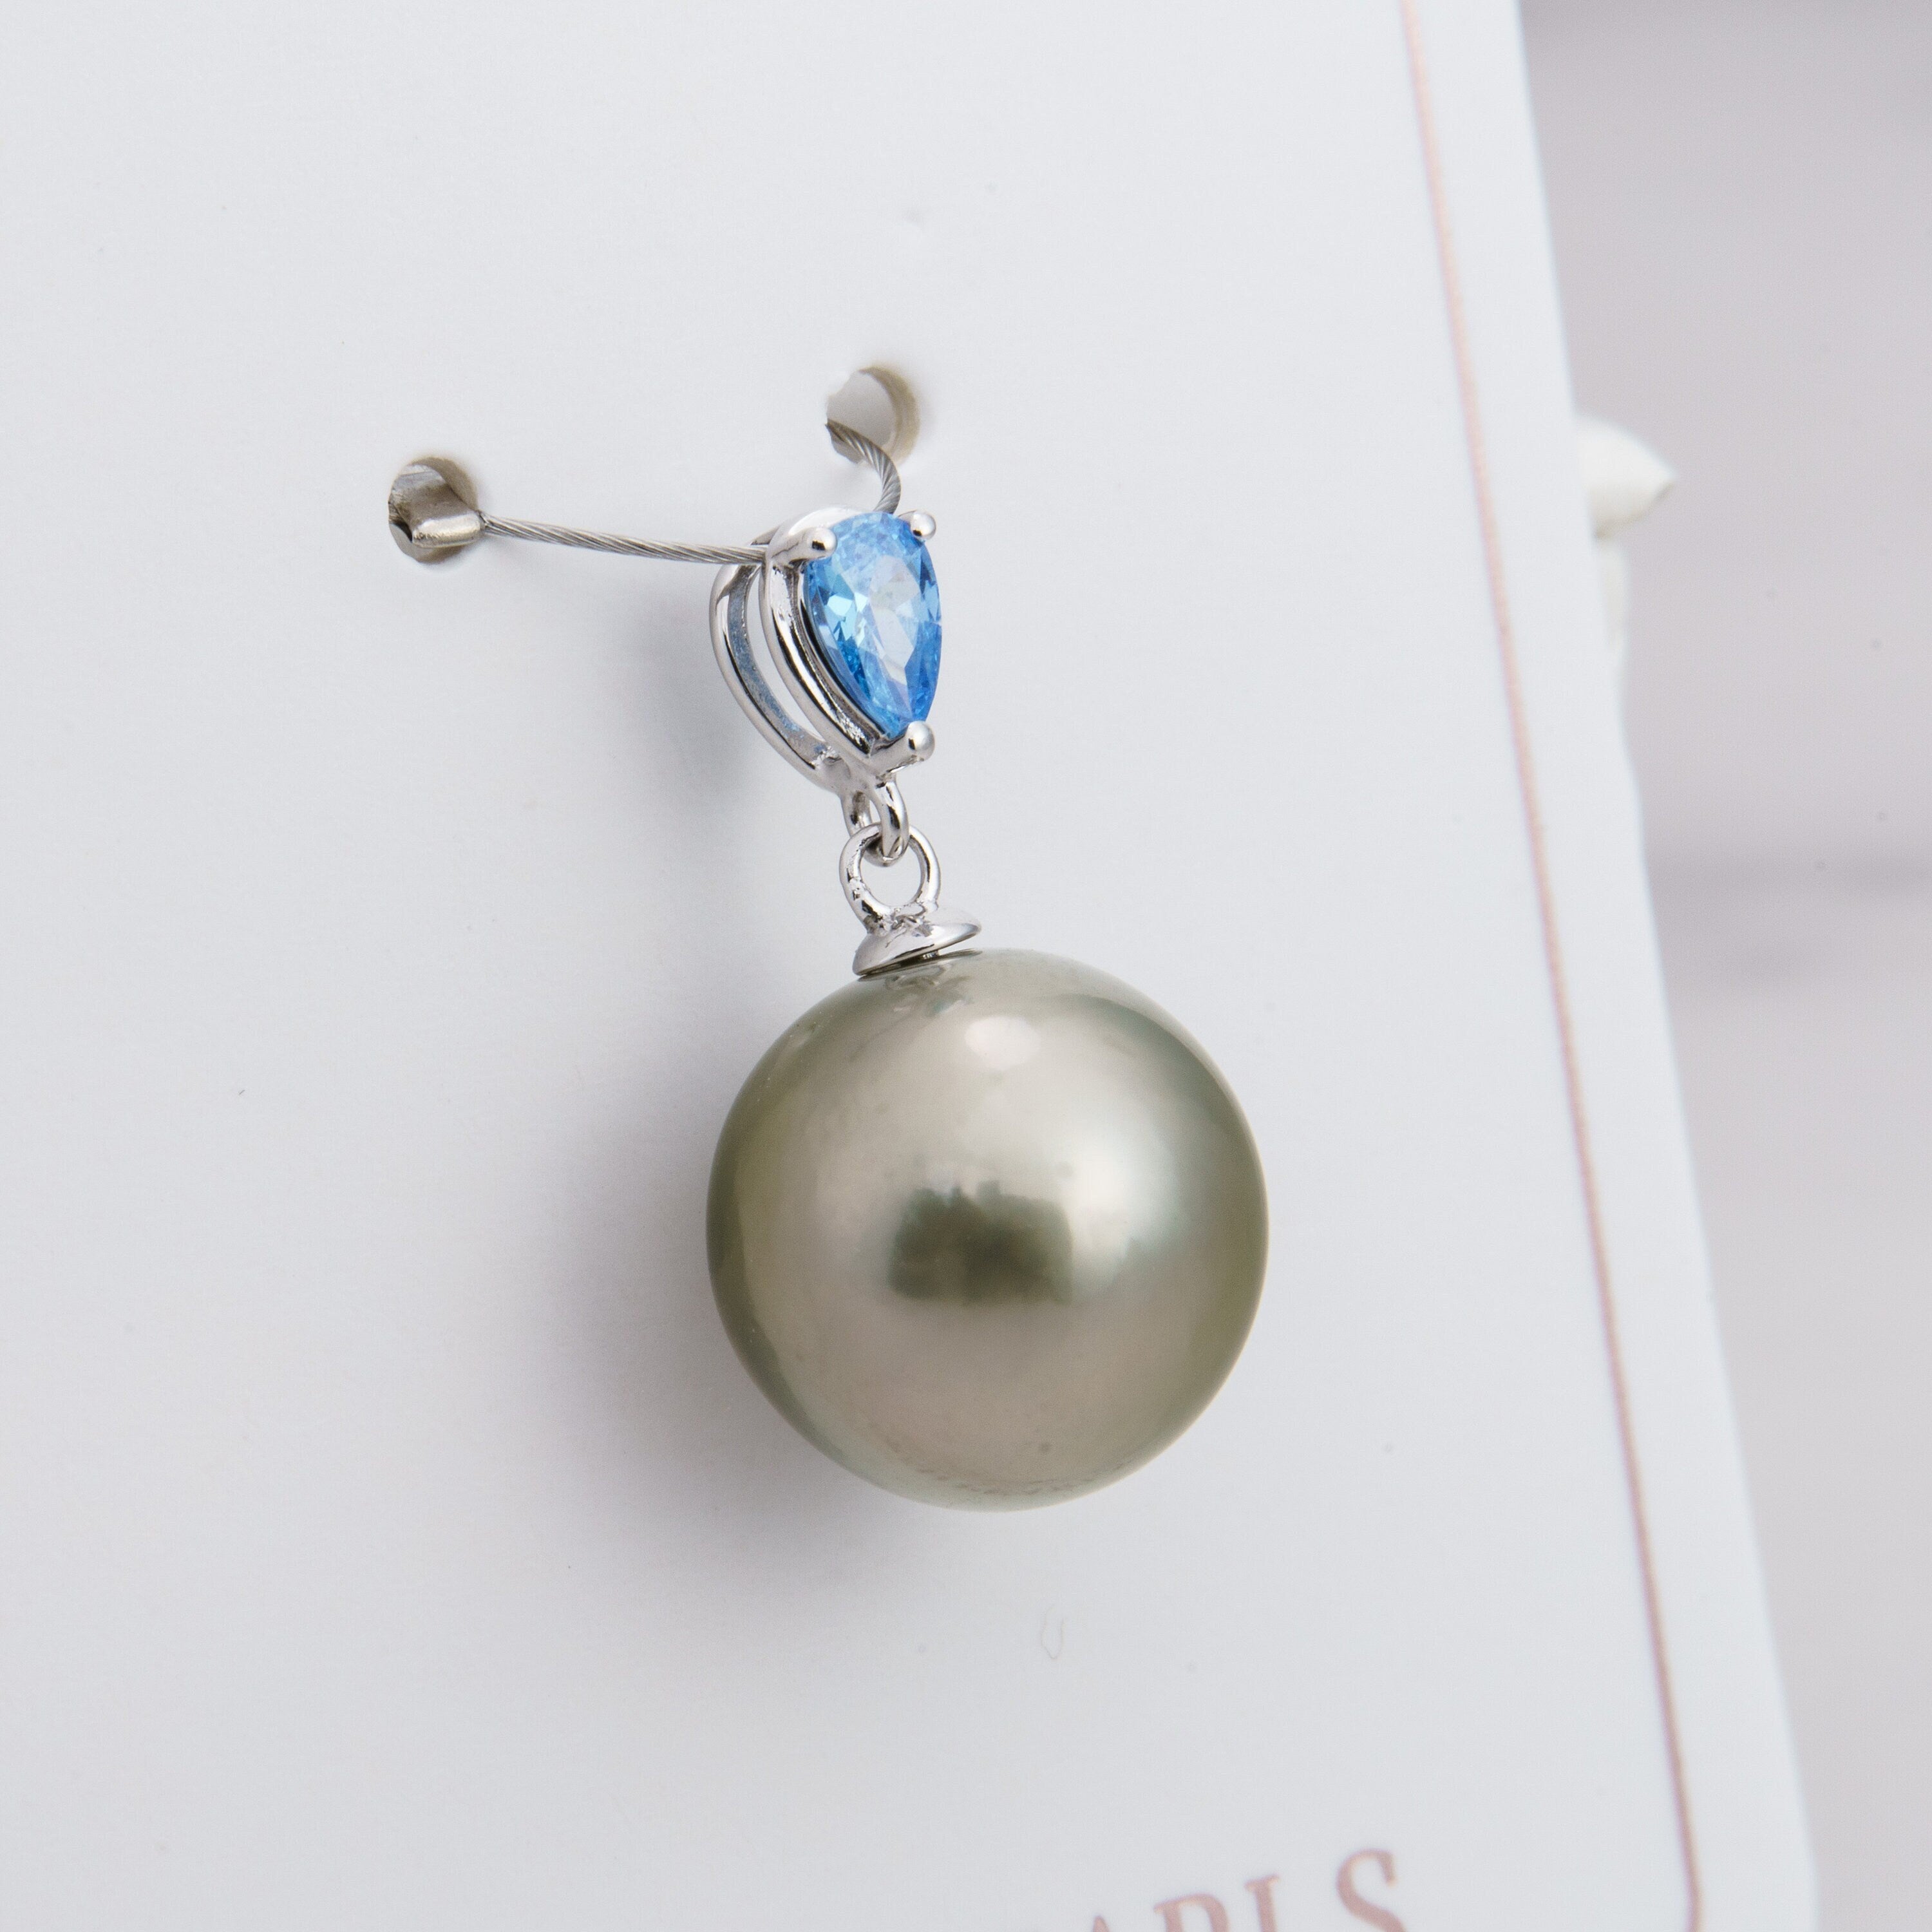 12mm tahitian pearl pendant, 925 sterling silver, rhodium finish, cubic zirconia